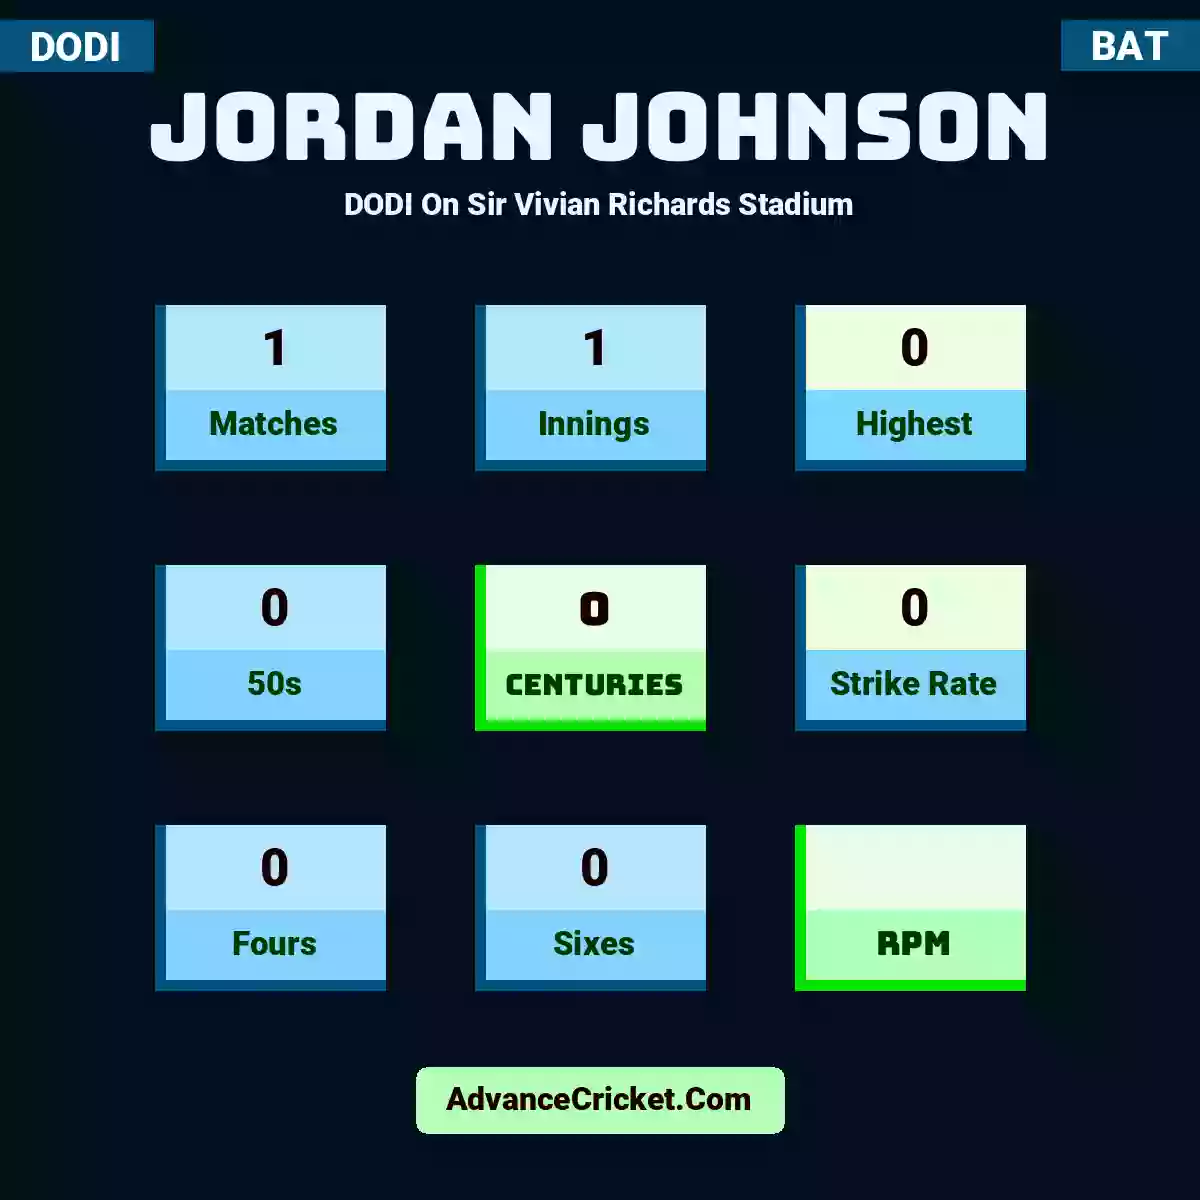 Jordan Johnson DODI  On Sir Vivian Richards Stadium, Jordan Johnson played 1 matches, scored 0 runs as highest, 0 half-centuries, and 0 centuries, with a strike rate of 0. J.Johnson hit 0 fours and 0 sixes.